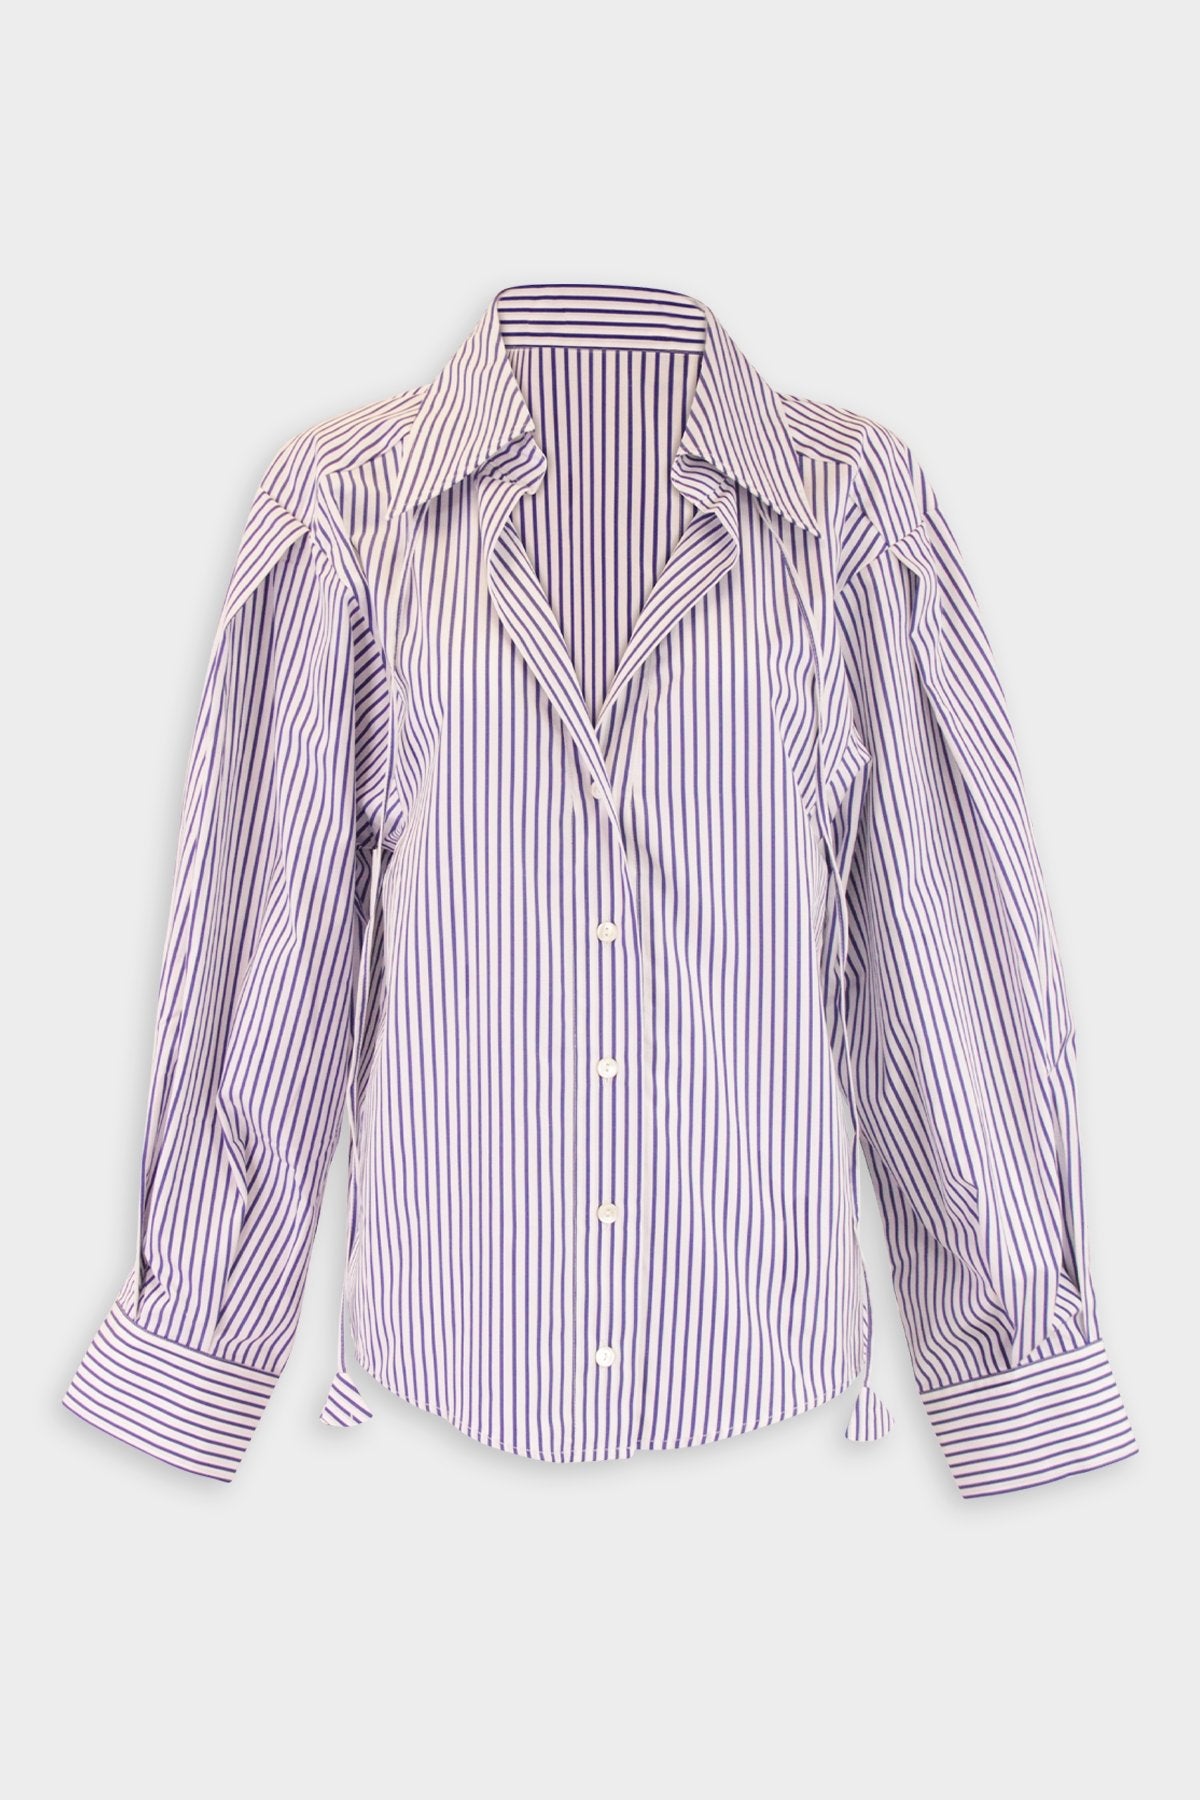 Clarity Shirt in Blue Breton Stripe - shop-olivia.com